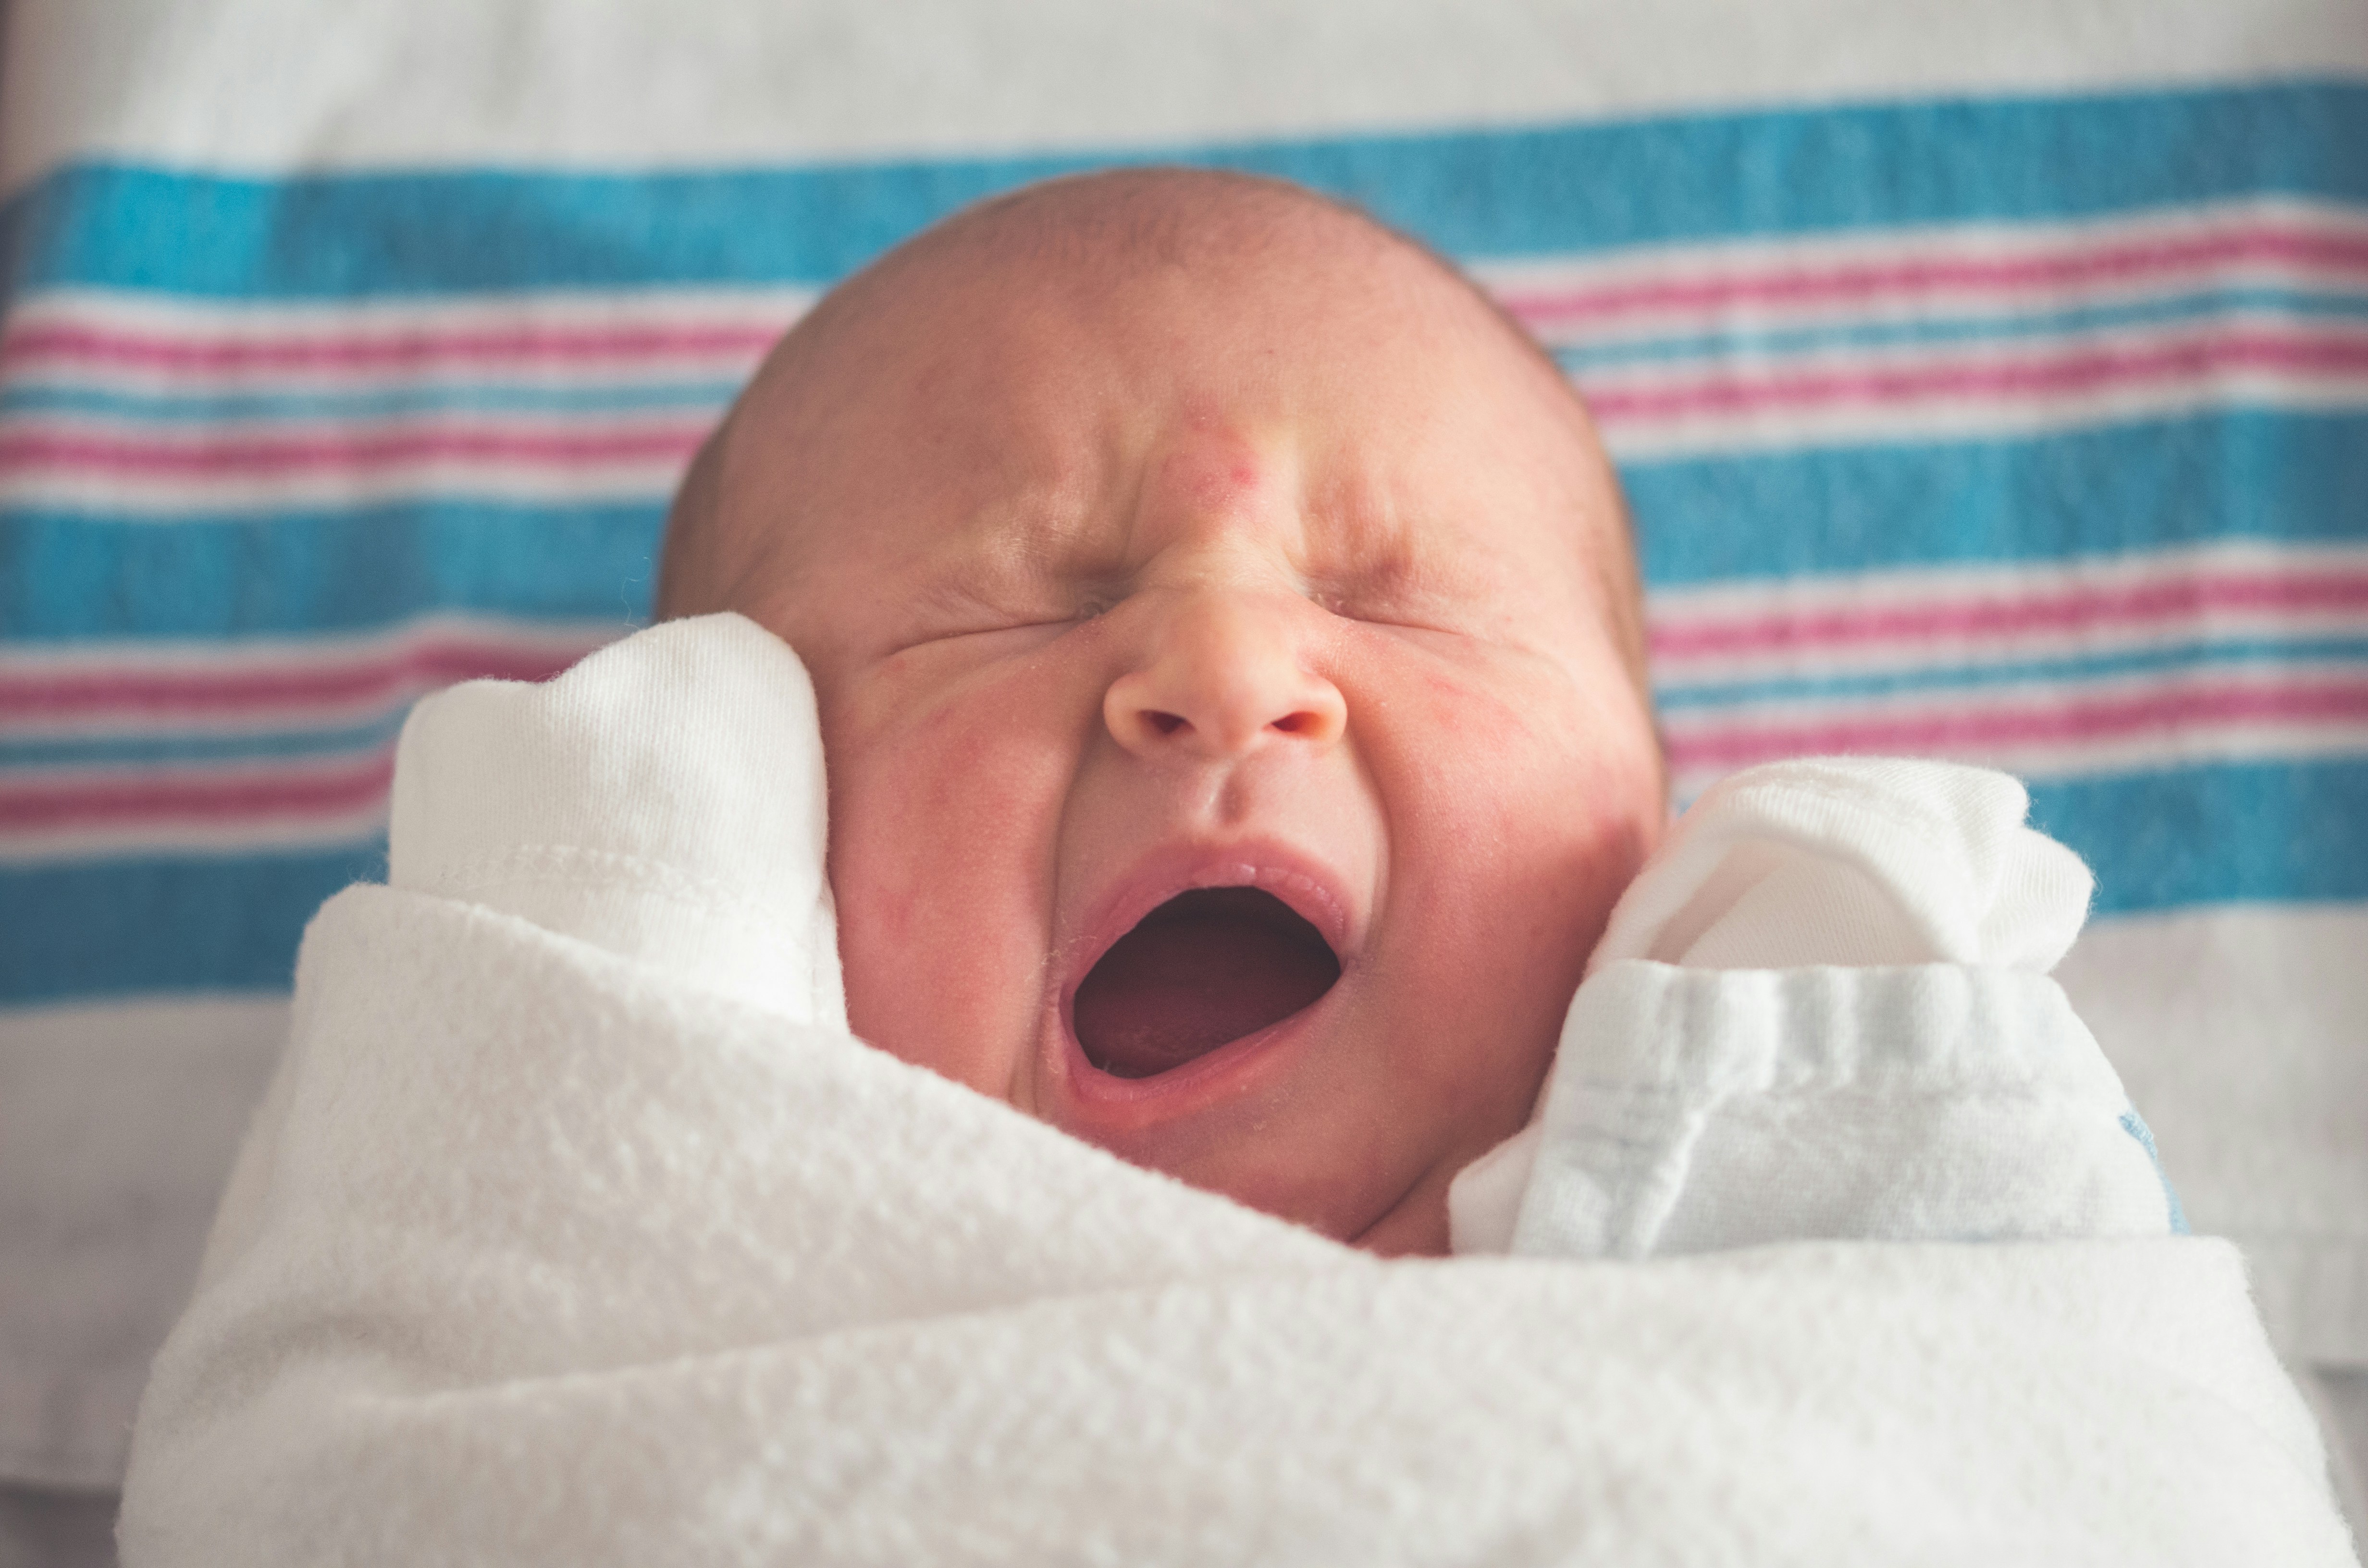 A cute little baby yawning | Source: Unsplash